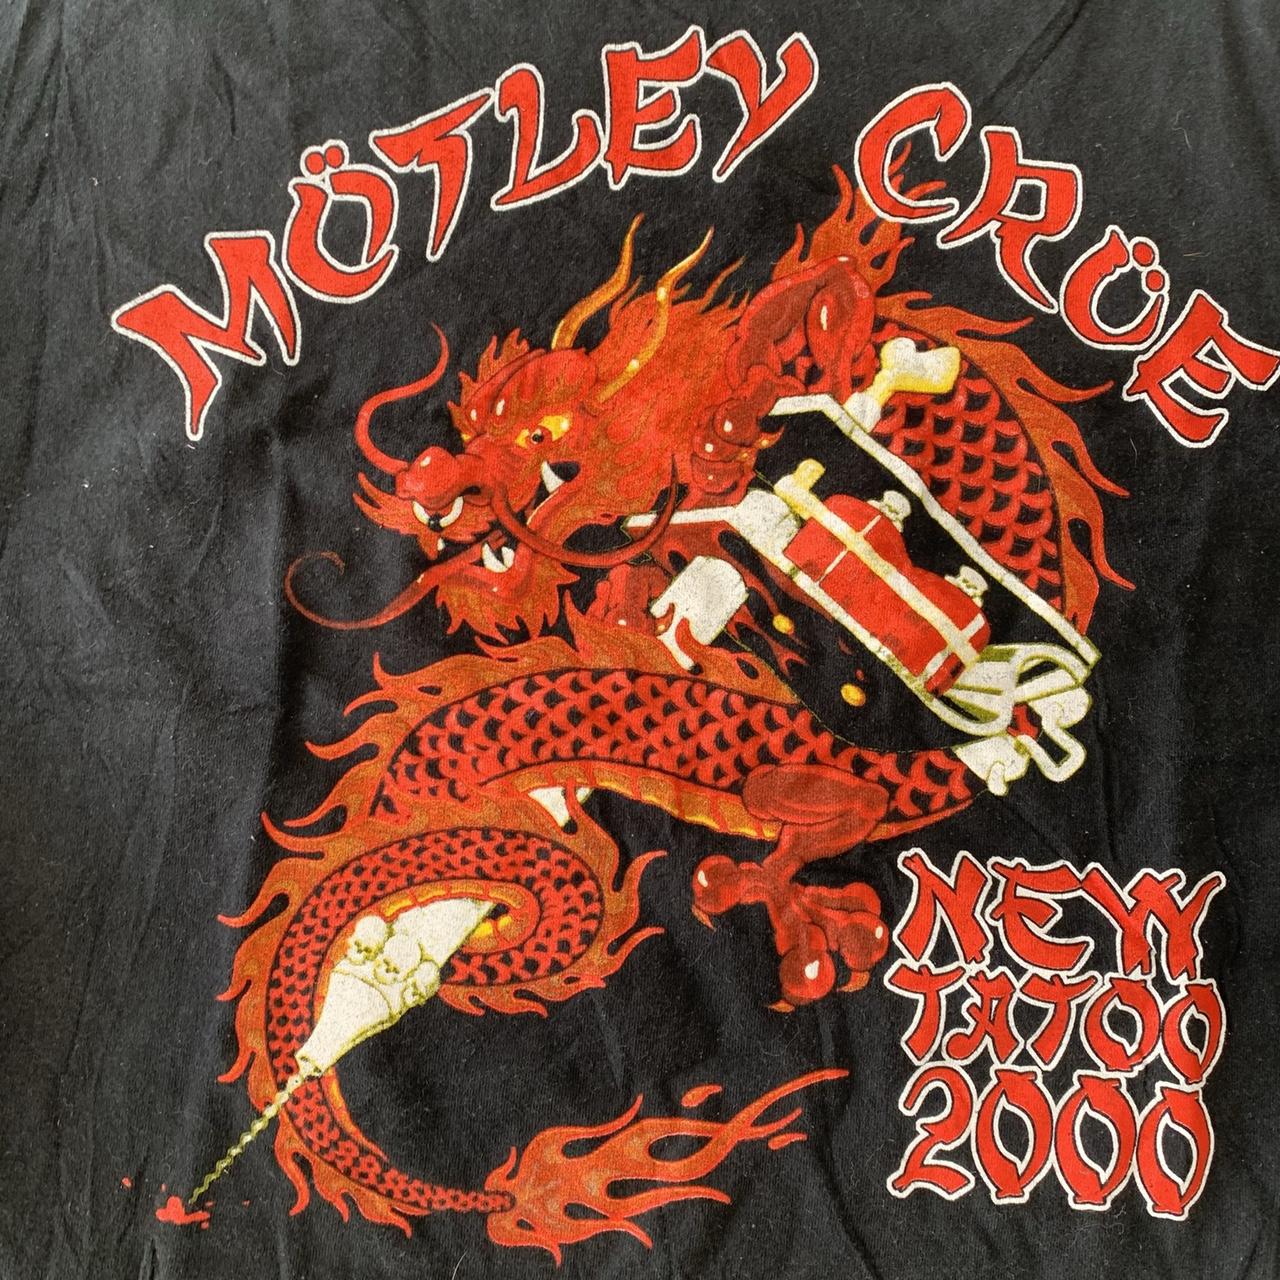 Vintage Motley crue new tattoo 2000 t-shirt - Depop